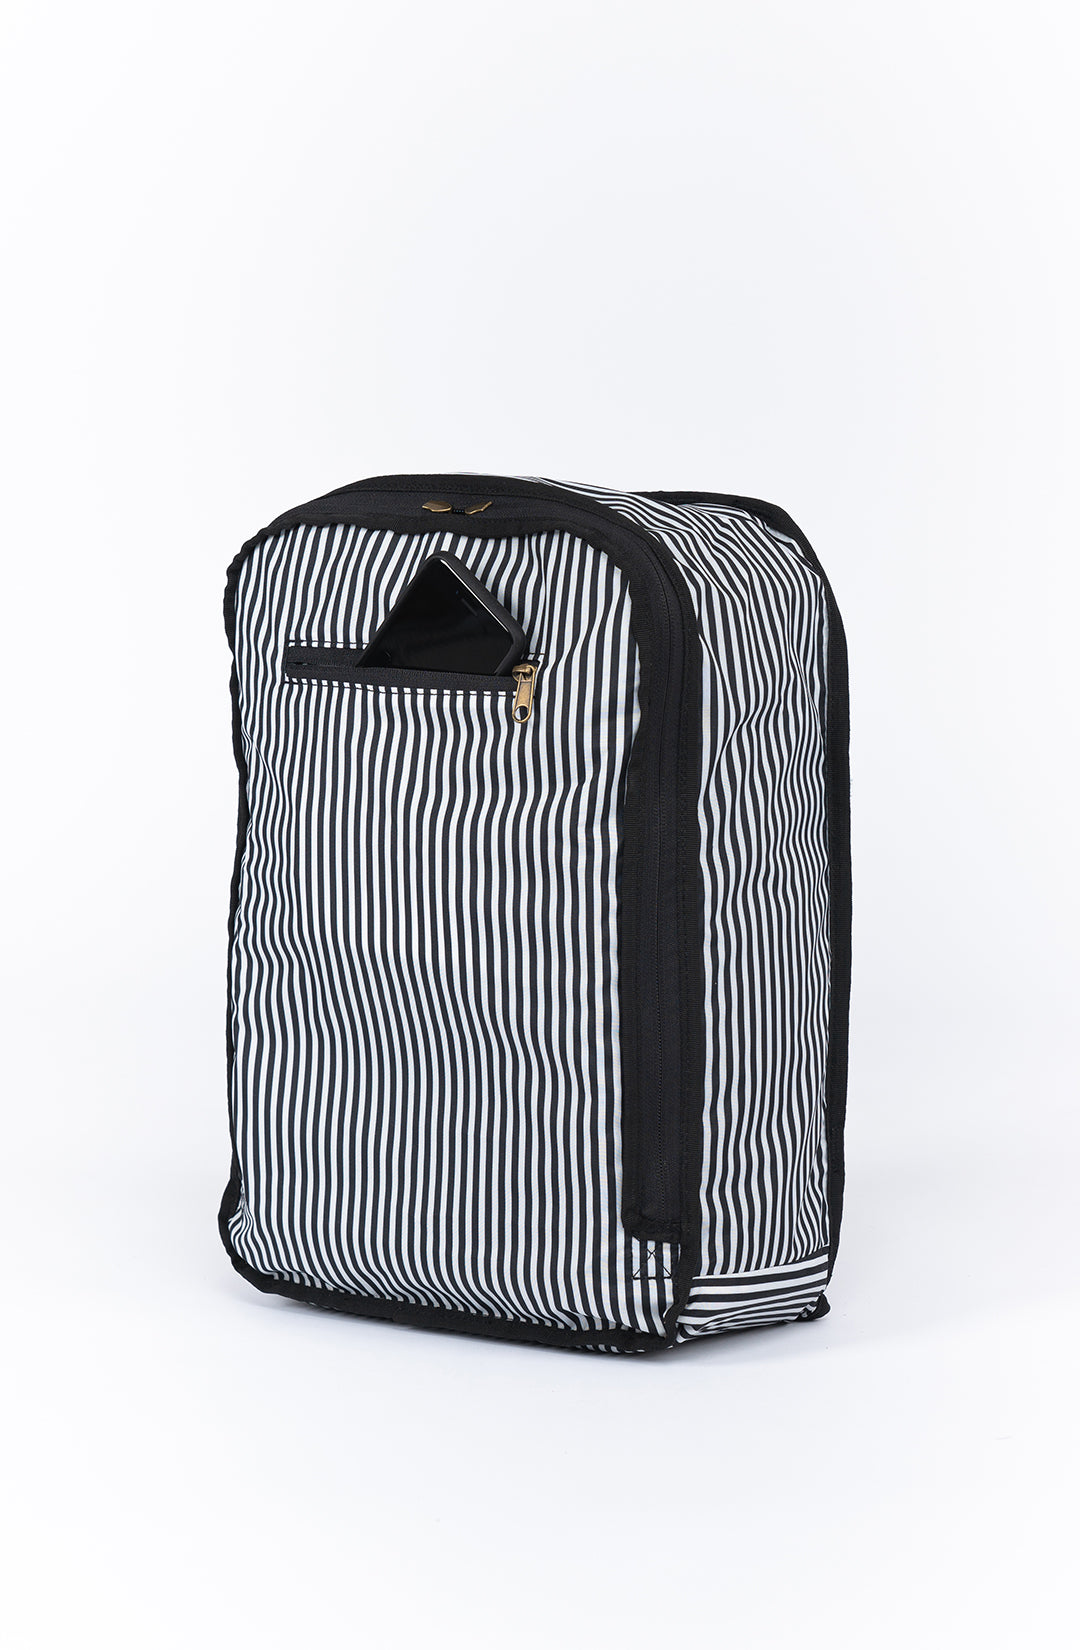 Elkin Diaper Bag Backpack (Hazelnut)